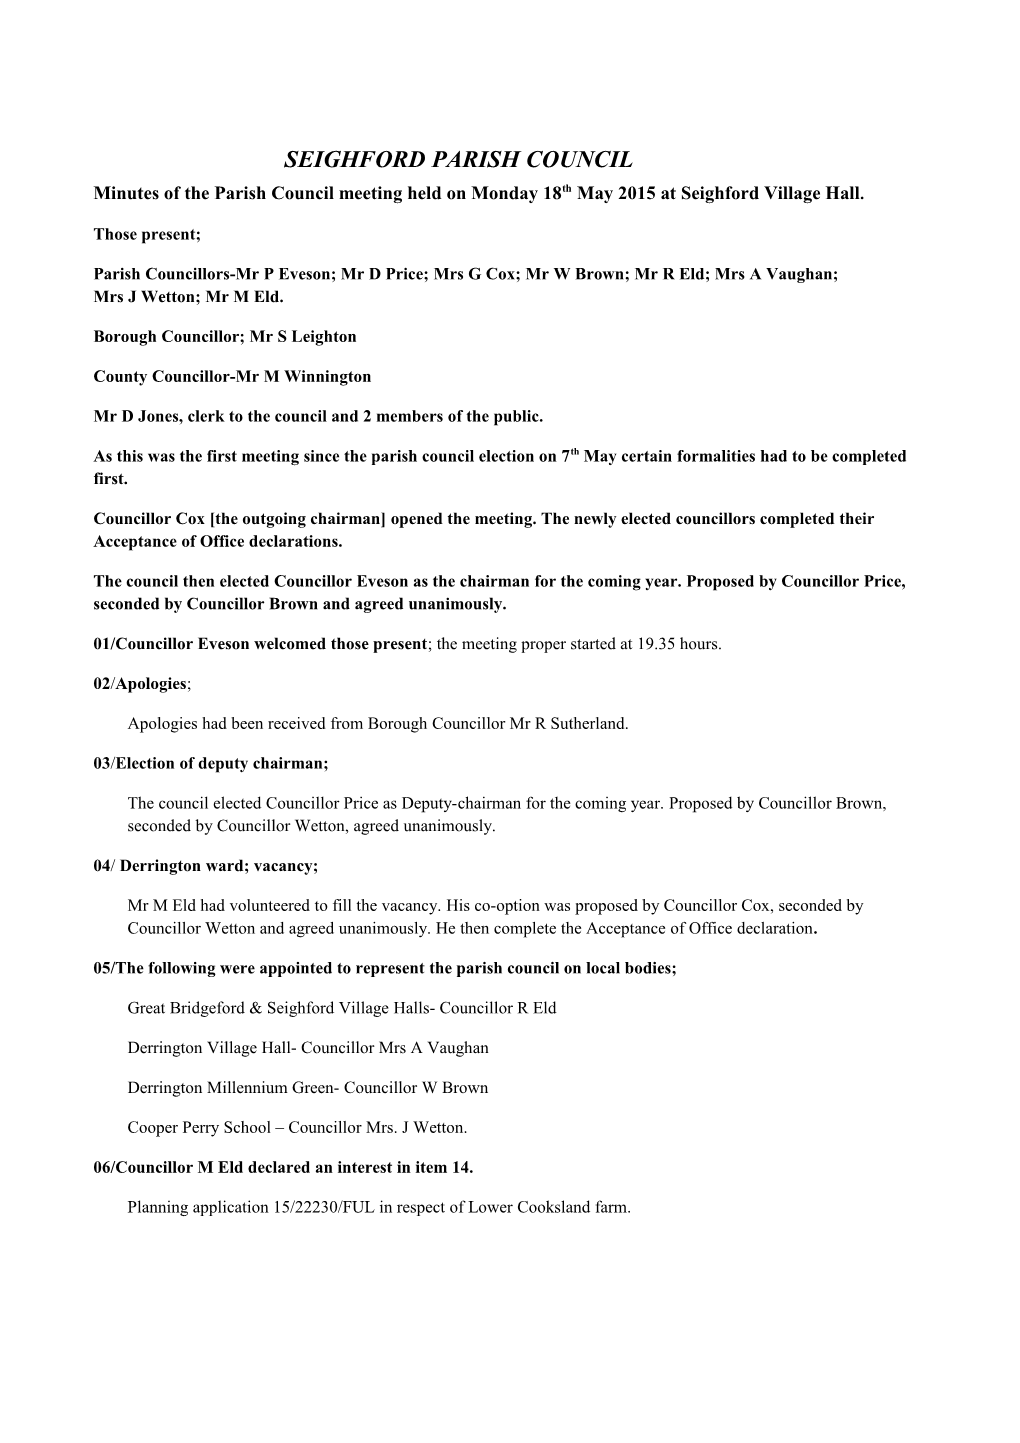 SEIGHFORD PARISH COUNCIL Minutes of the Parish Council Meeting Held on Monday 18Th May 2015 at Seighford Village Hall